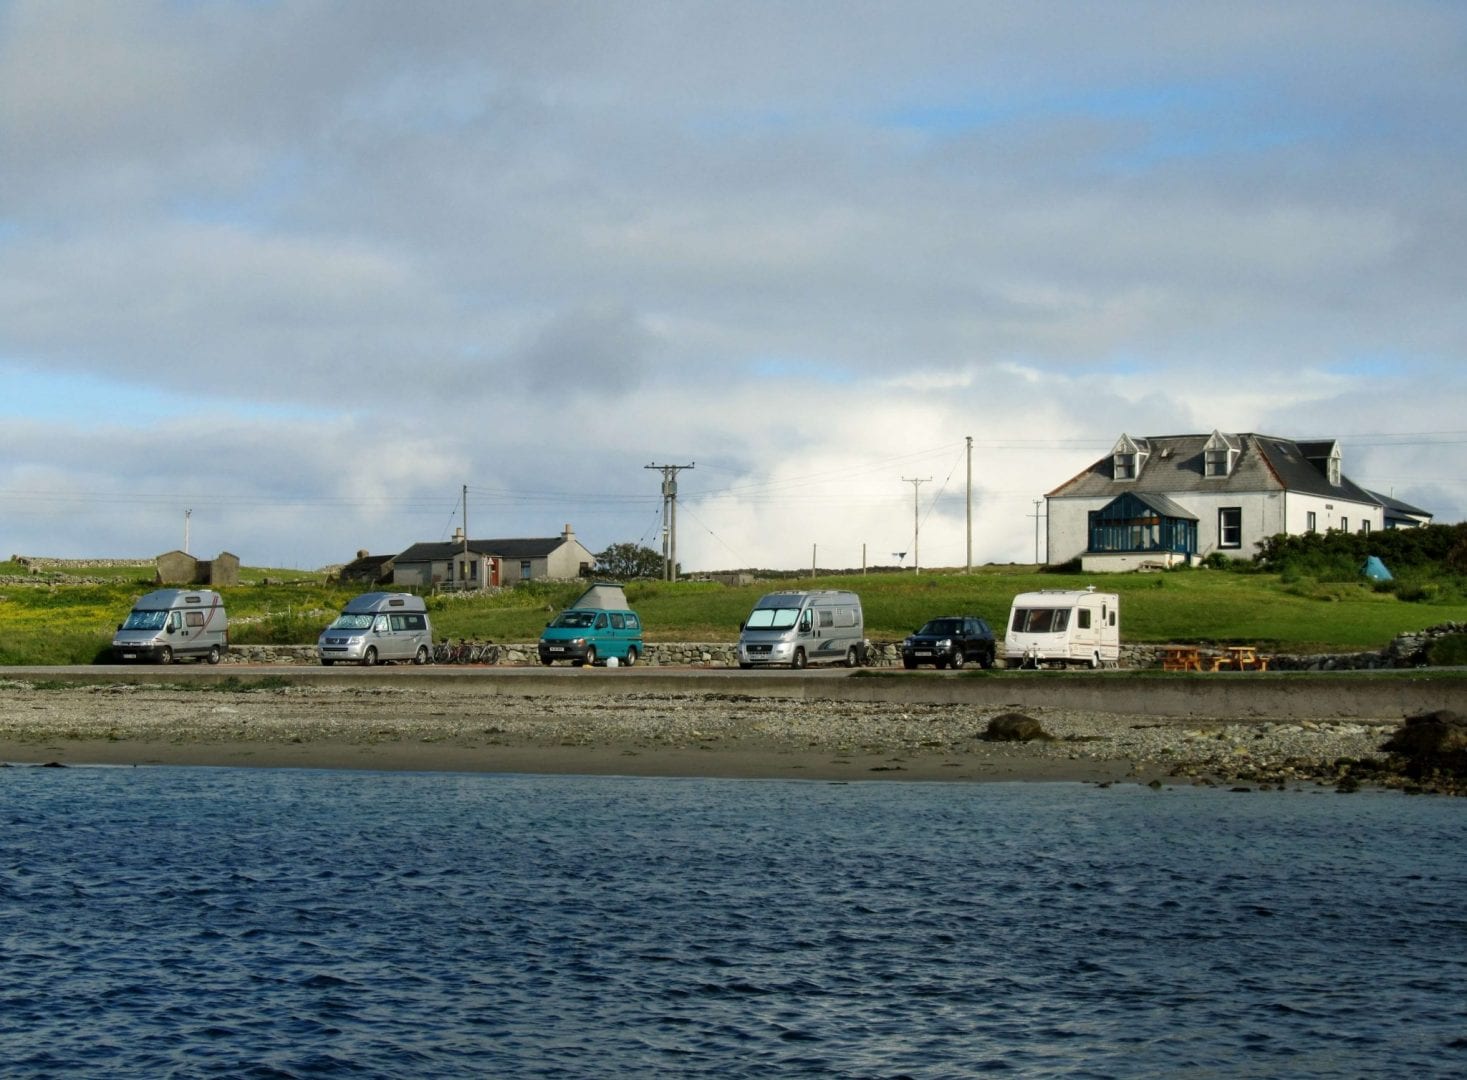 Gaudiesfauld Hostel - Shetland